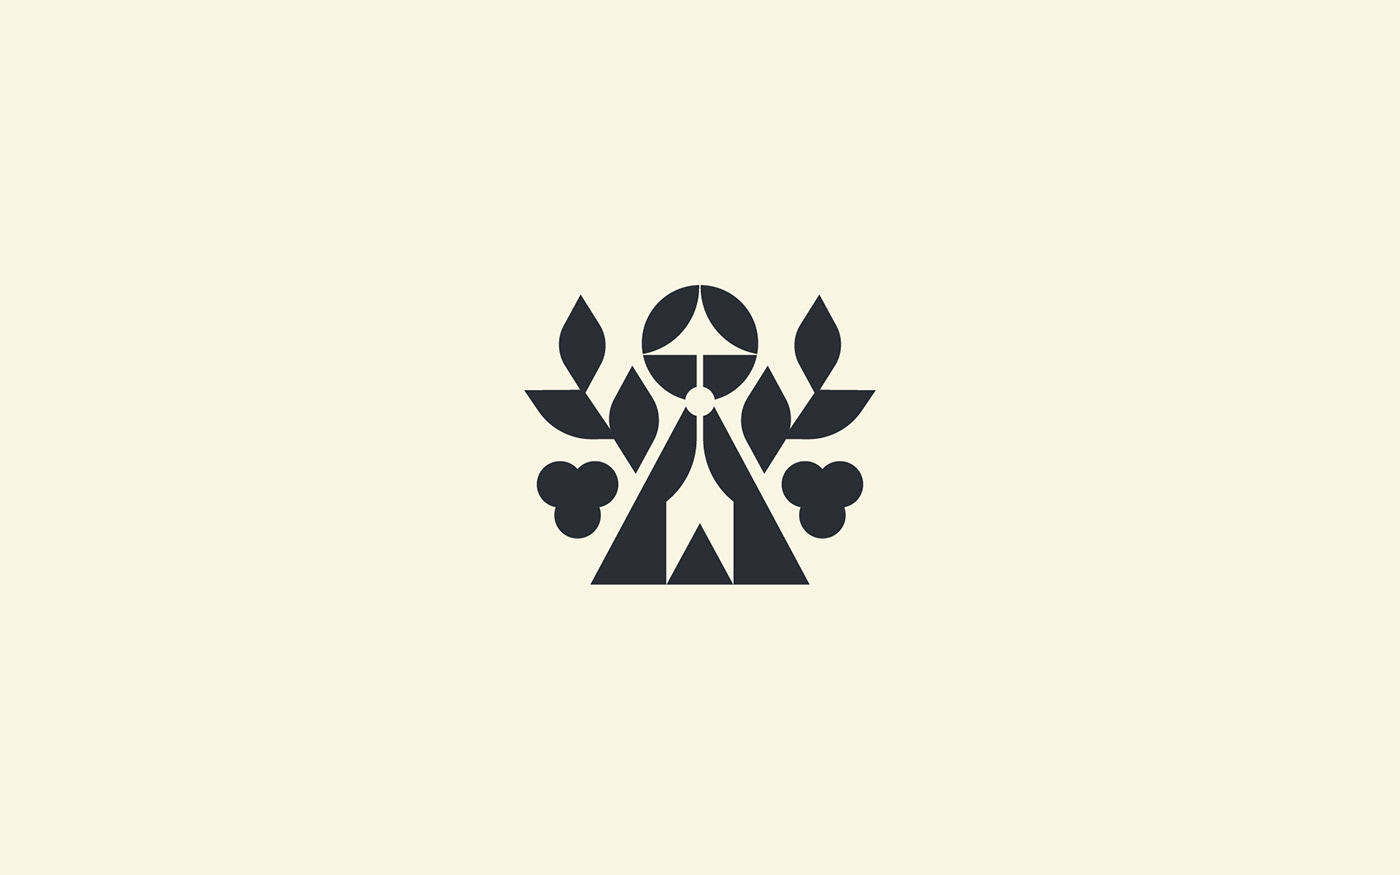 arrow city coat of arms geometry izhevsk Logotype Rowan shield Udmurtia